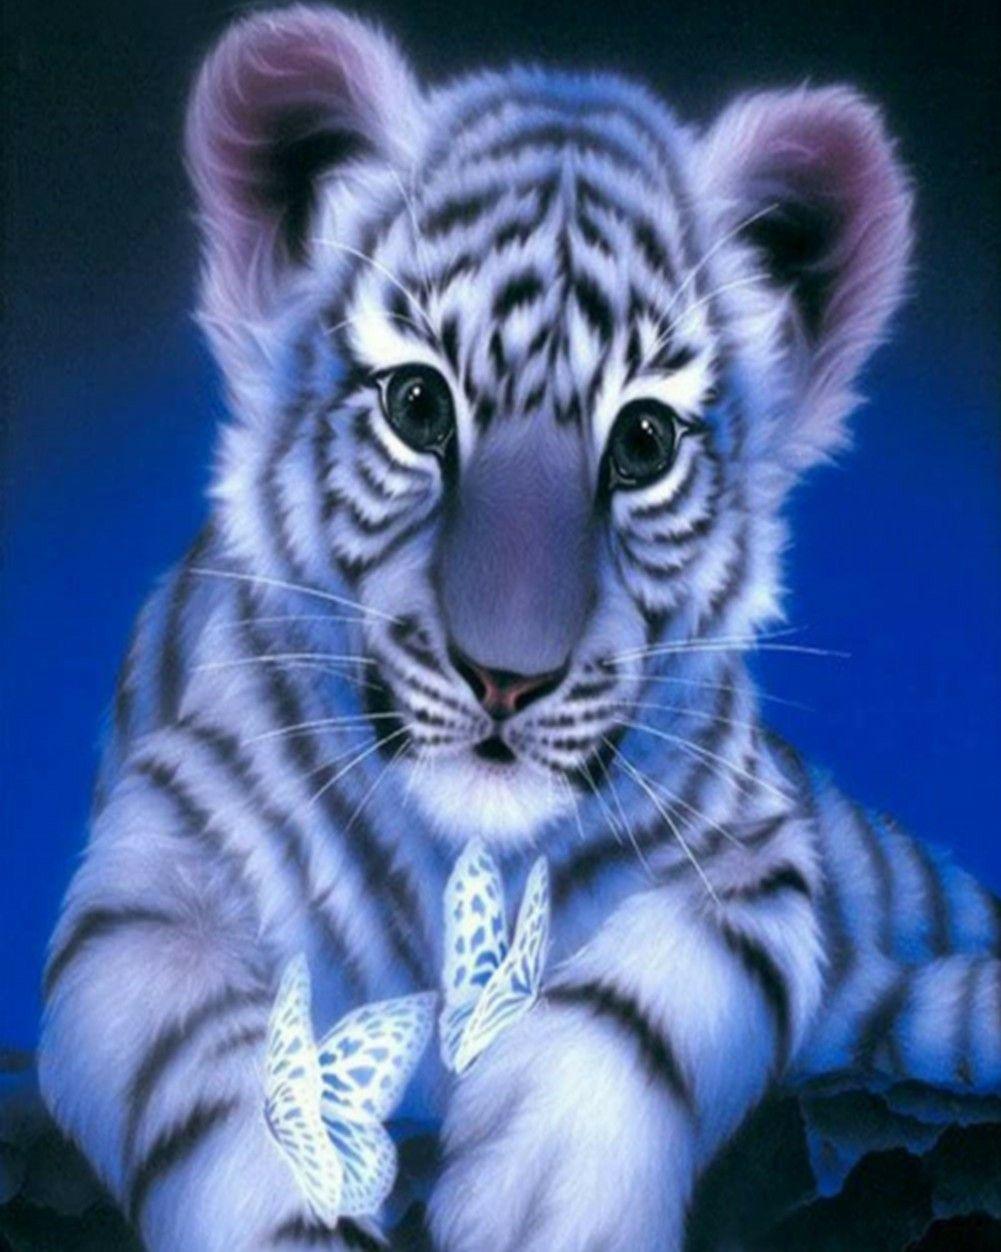 Diamond Embroidery / 5D Picture / Diamond Mosaic / Diamond Painting - tiger, size 40x50 cm